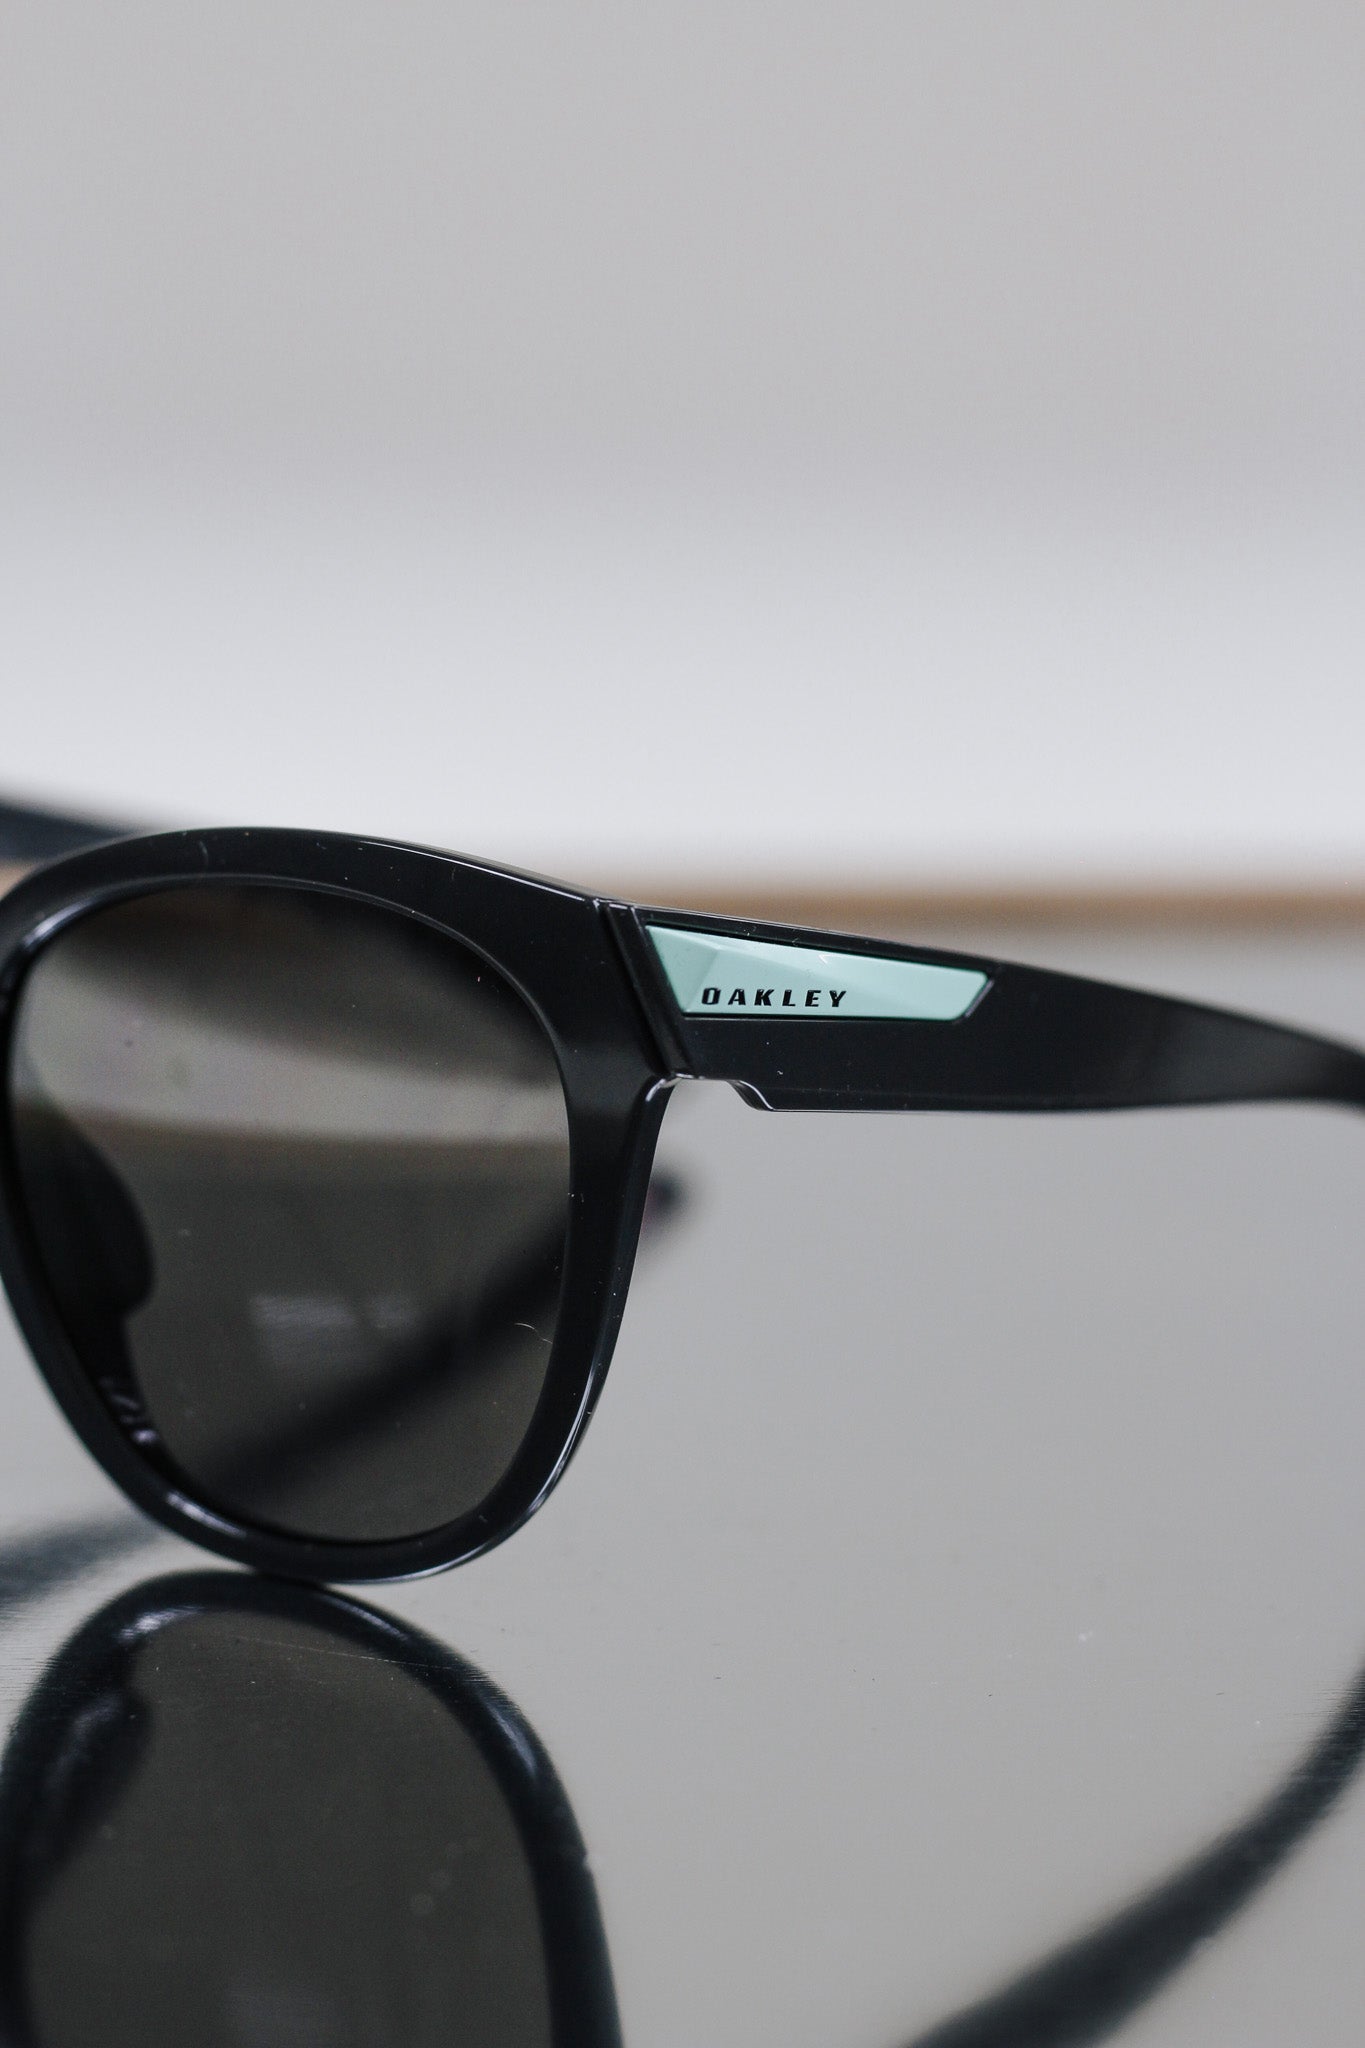 Carbon Black Low Key Sunglasses By Oakley